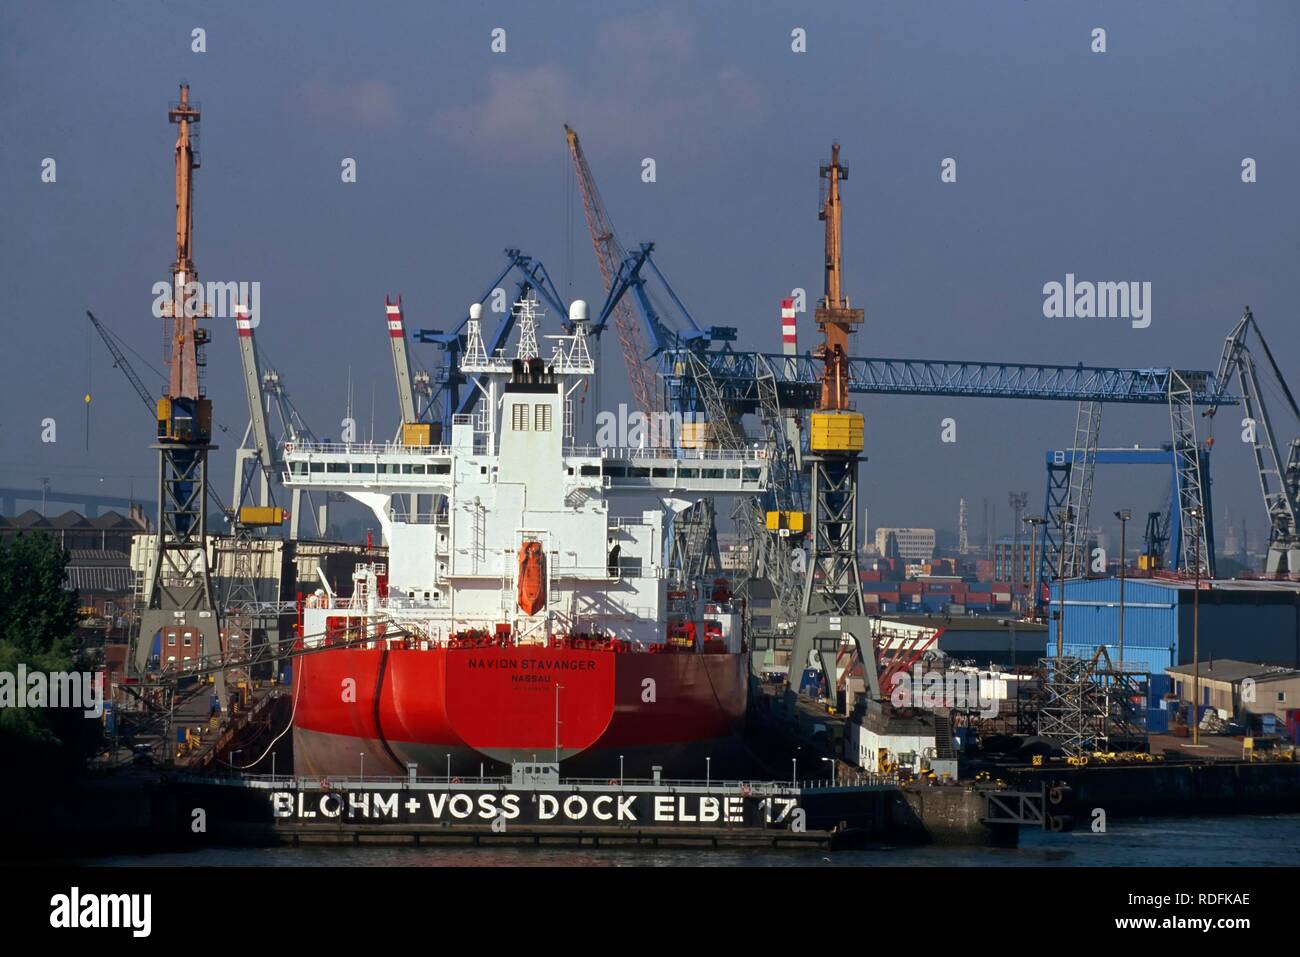 Blohm and Voss shipyard, docks in the port of Hamburg Stock Photo